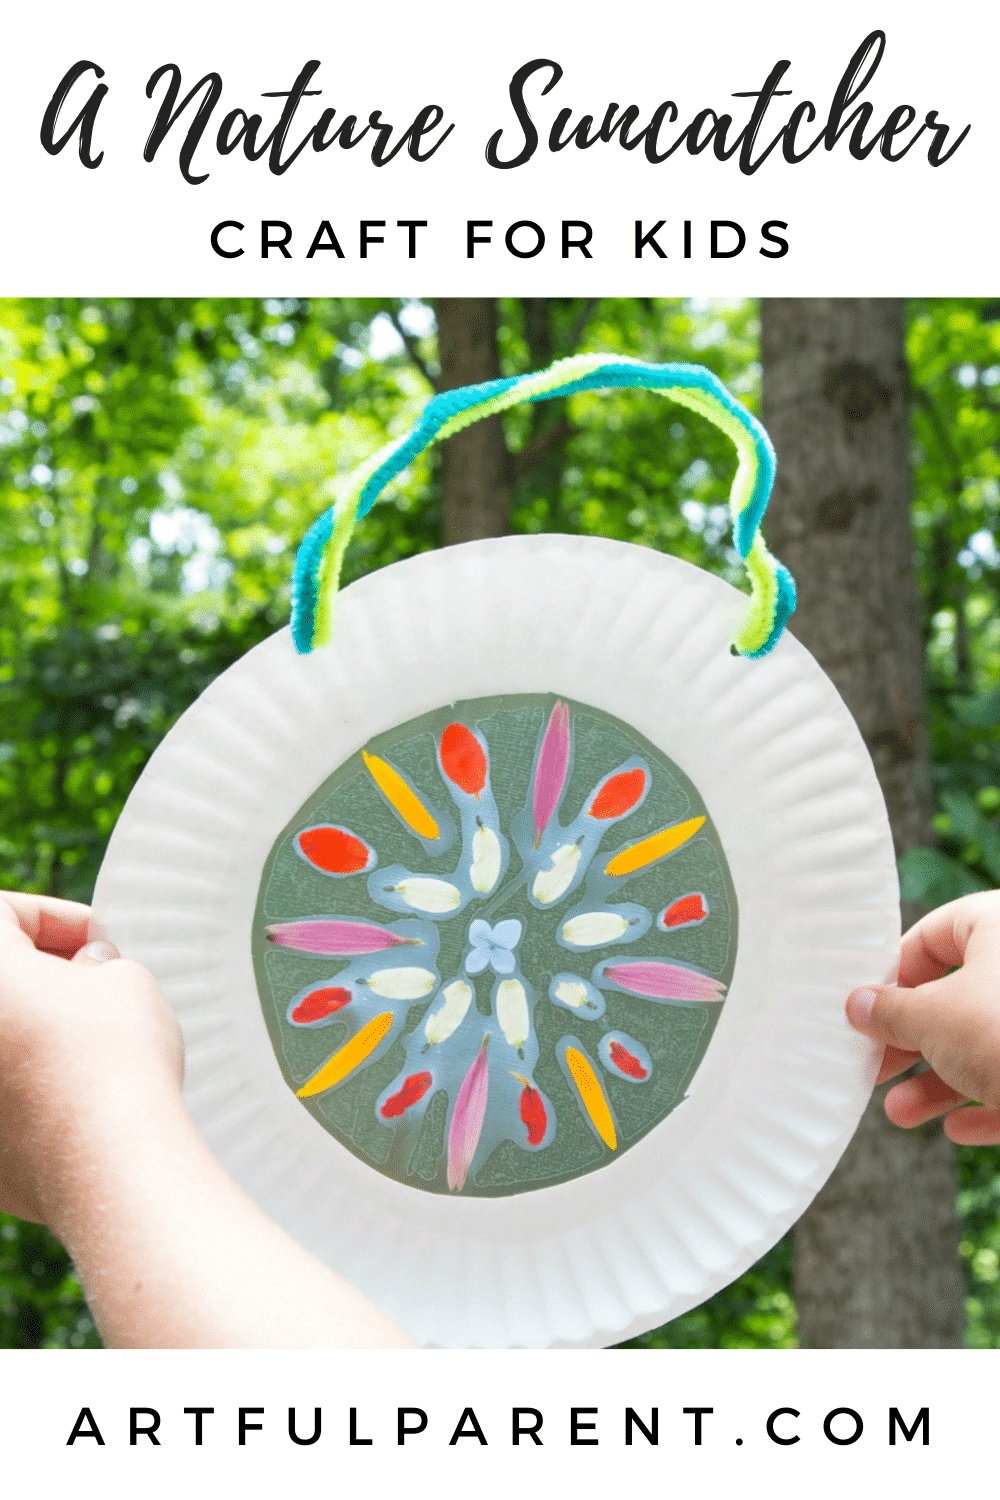 A Nature Suncatcher Craft for Kids